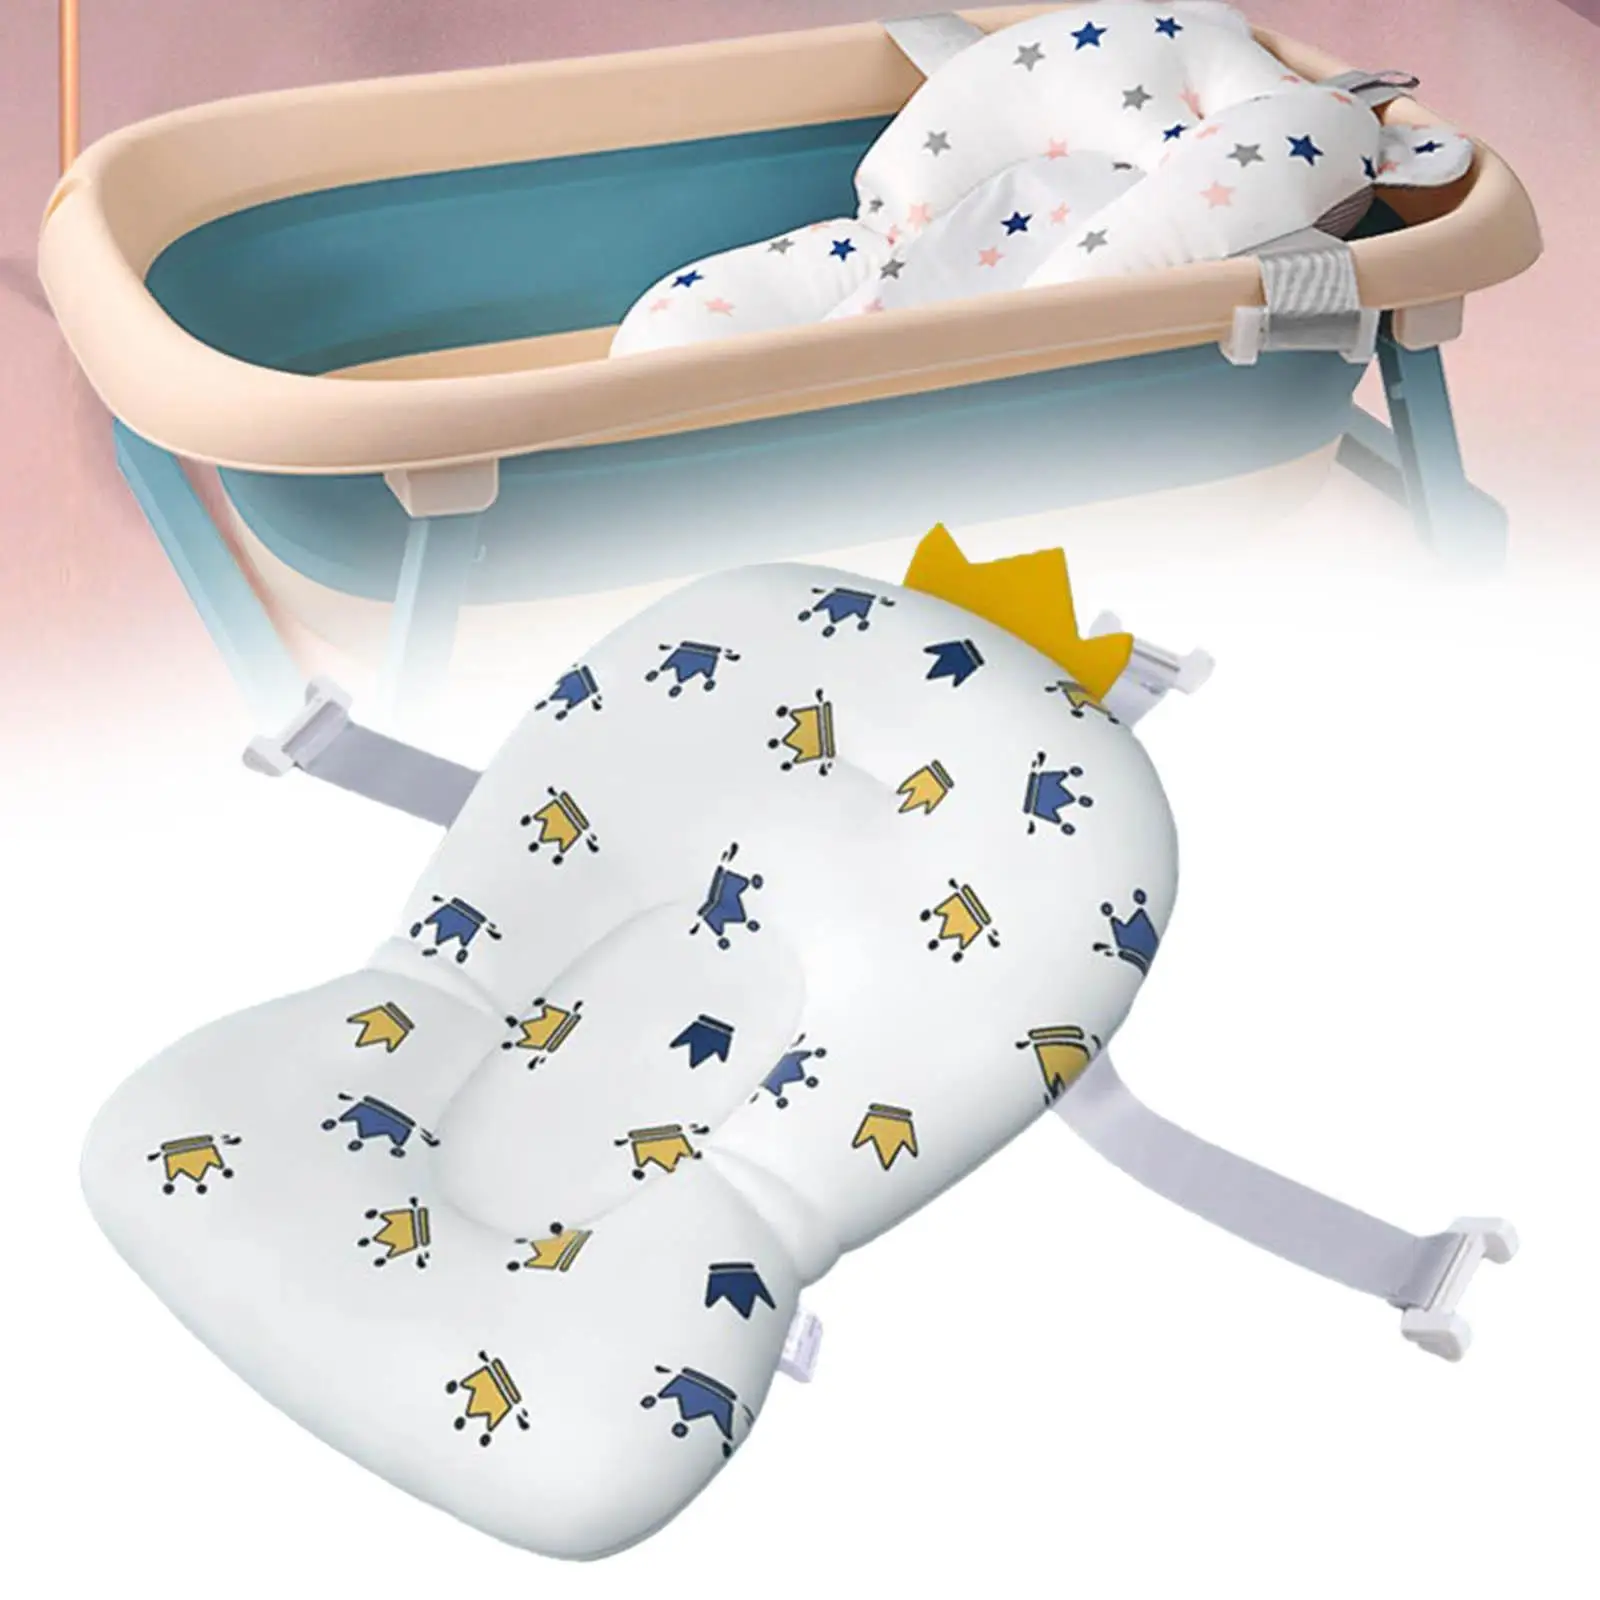 Baby Bath Cushion Pad Babies Safety Shower Mat Infant Bath Supporter Net